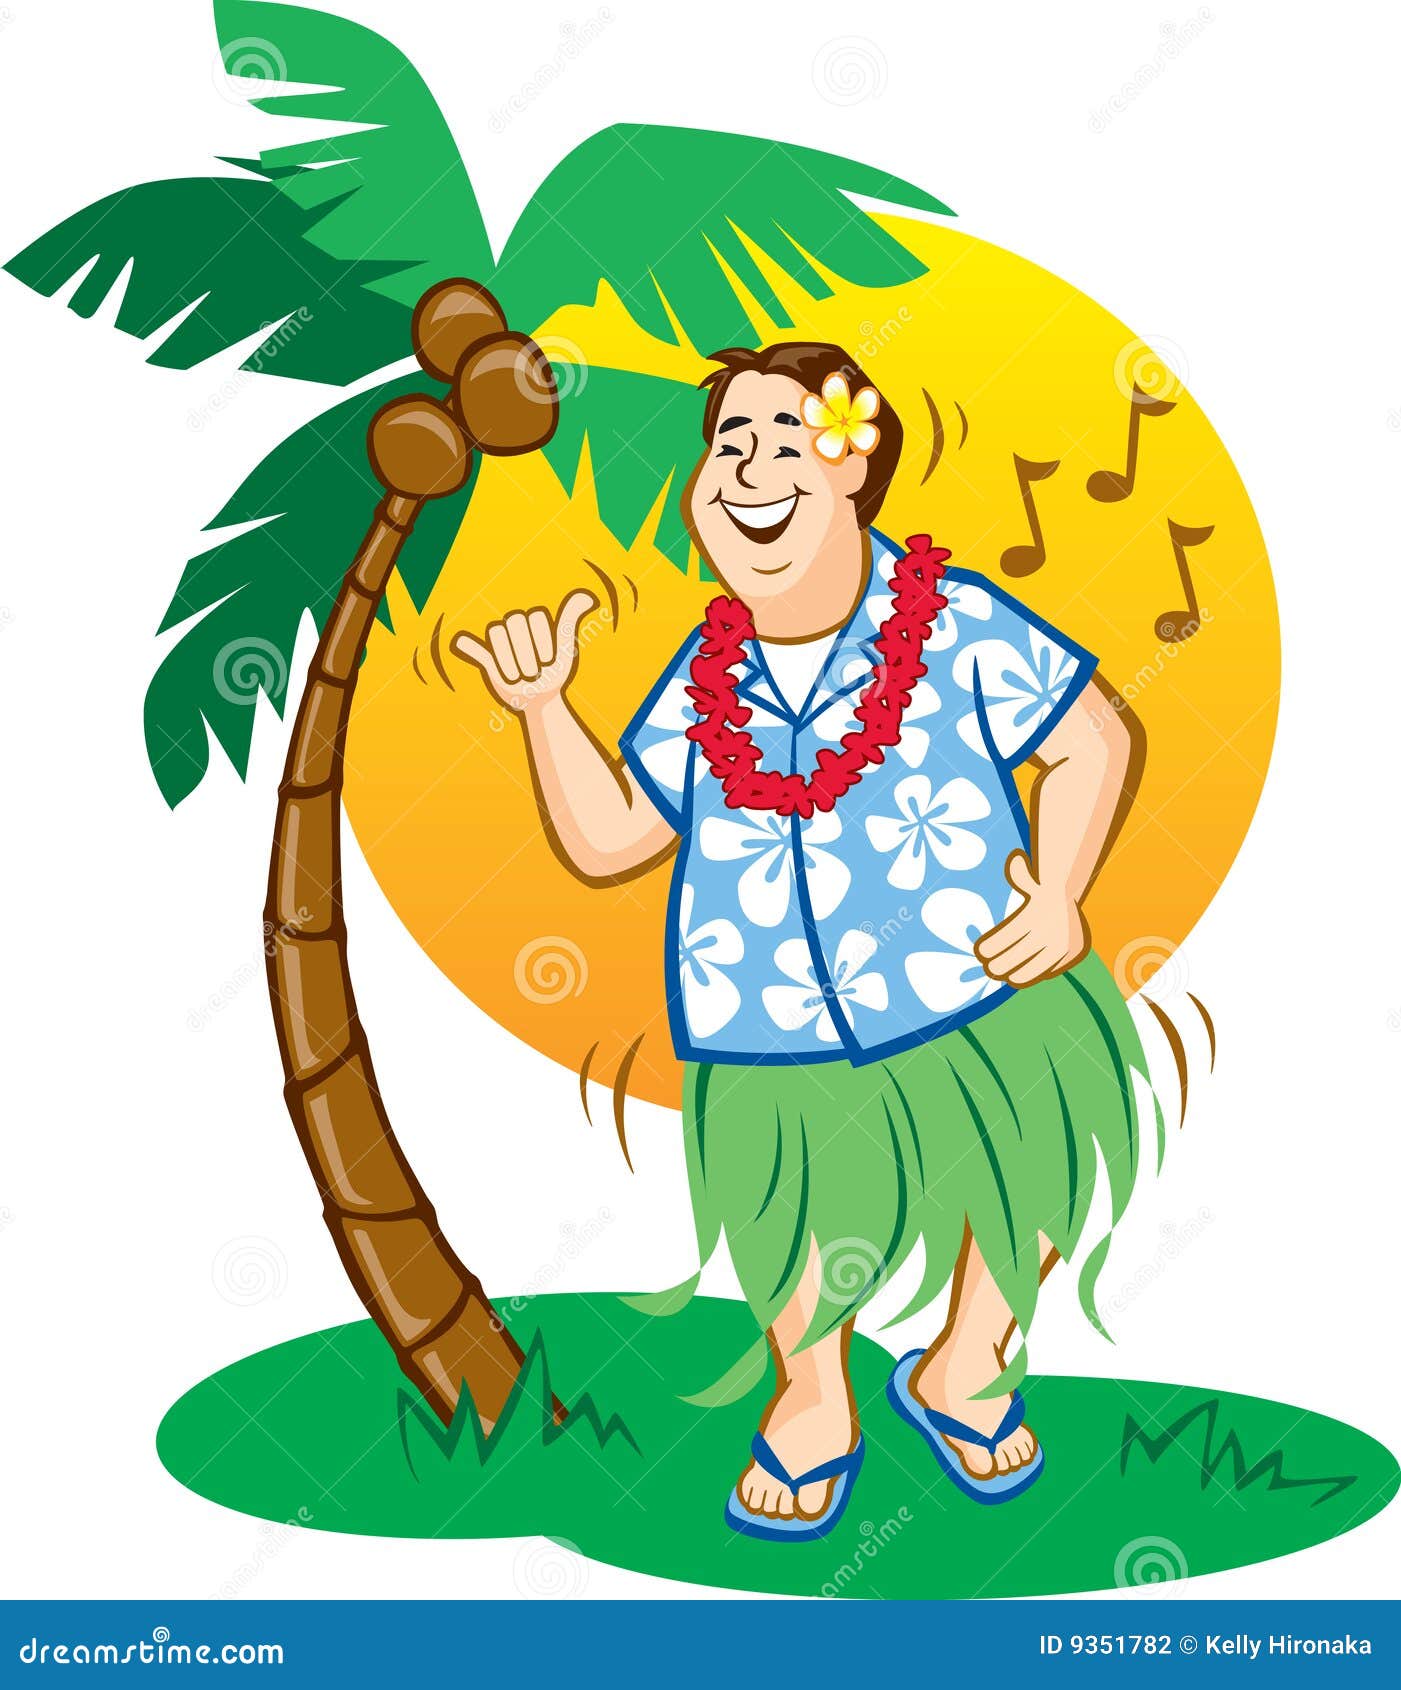 Tourist Hula Dance stock illustration. Image of frangipani - 9351782